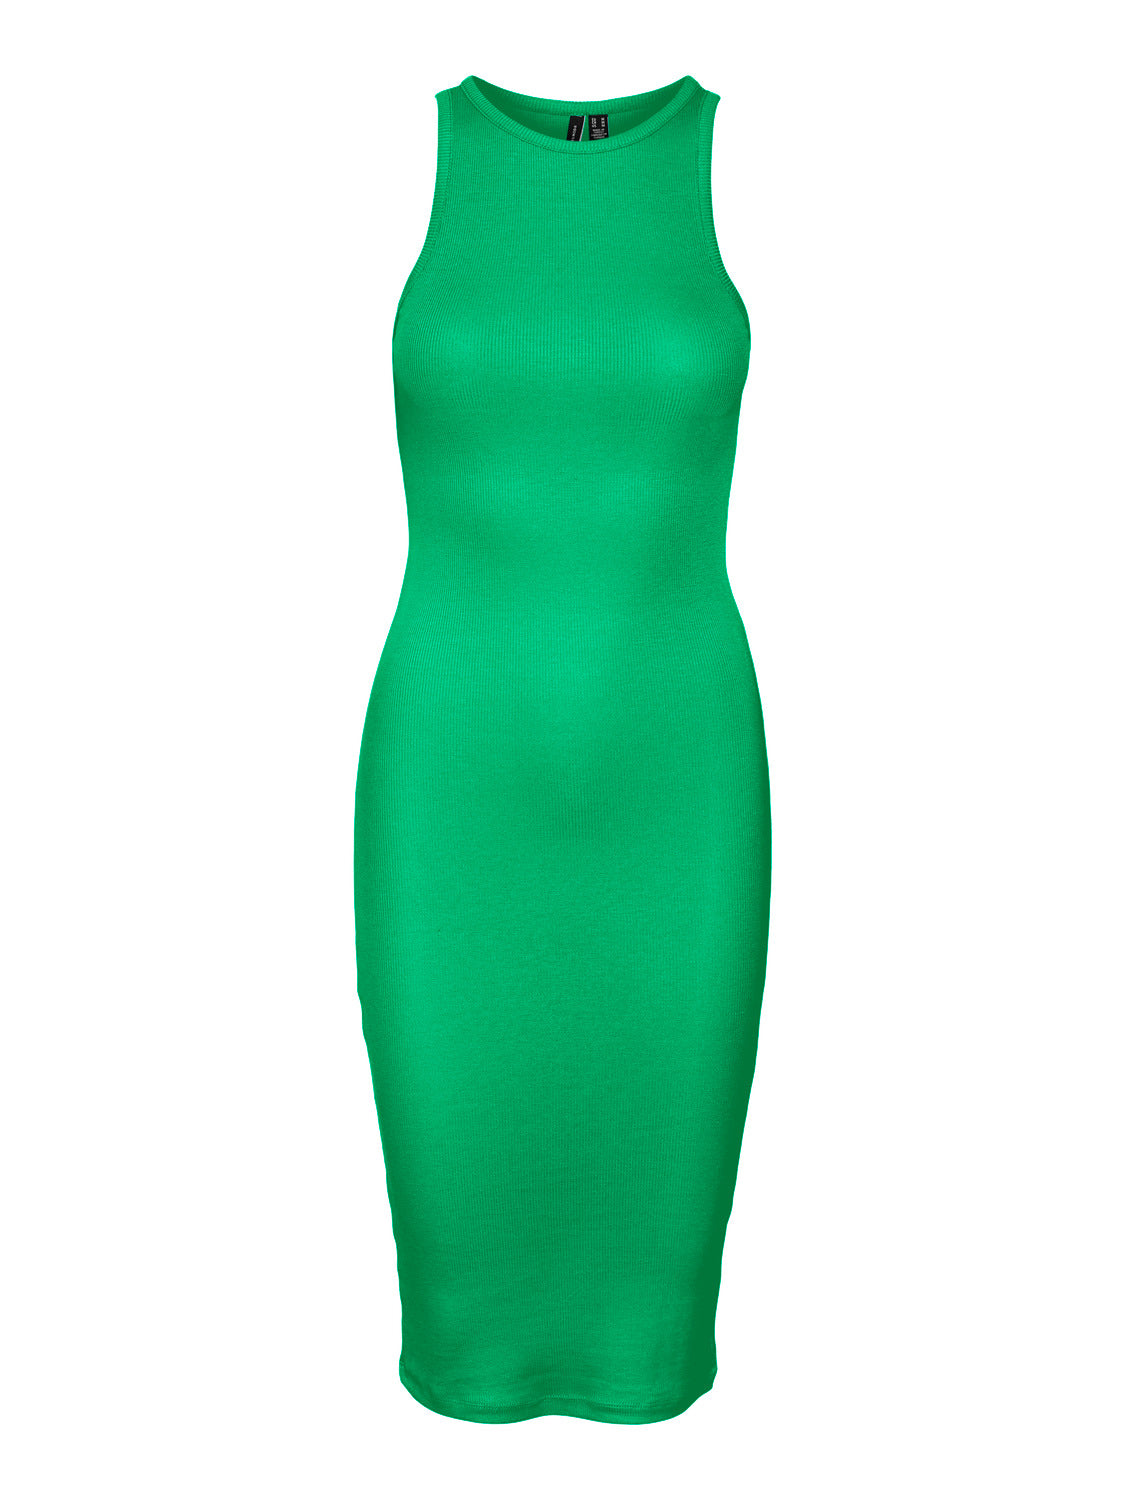 VMROMA Dress - Bright Green